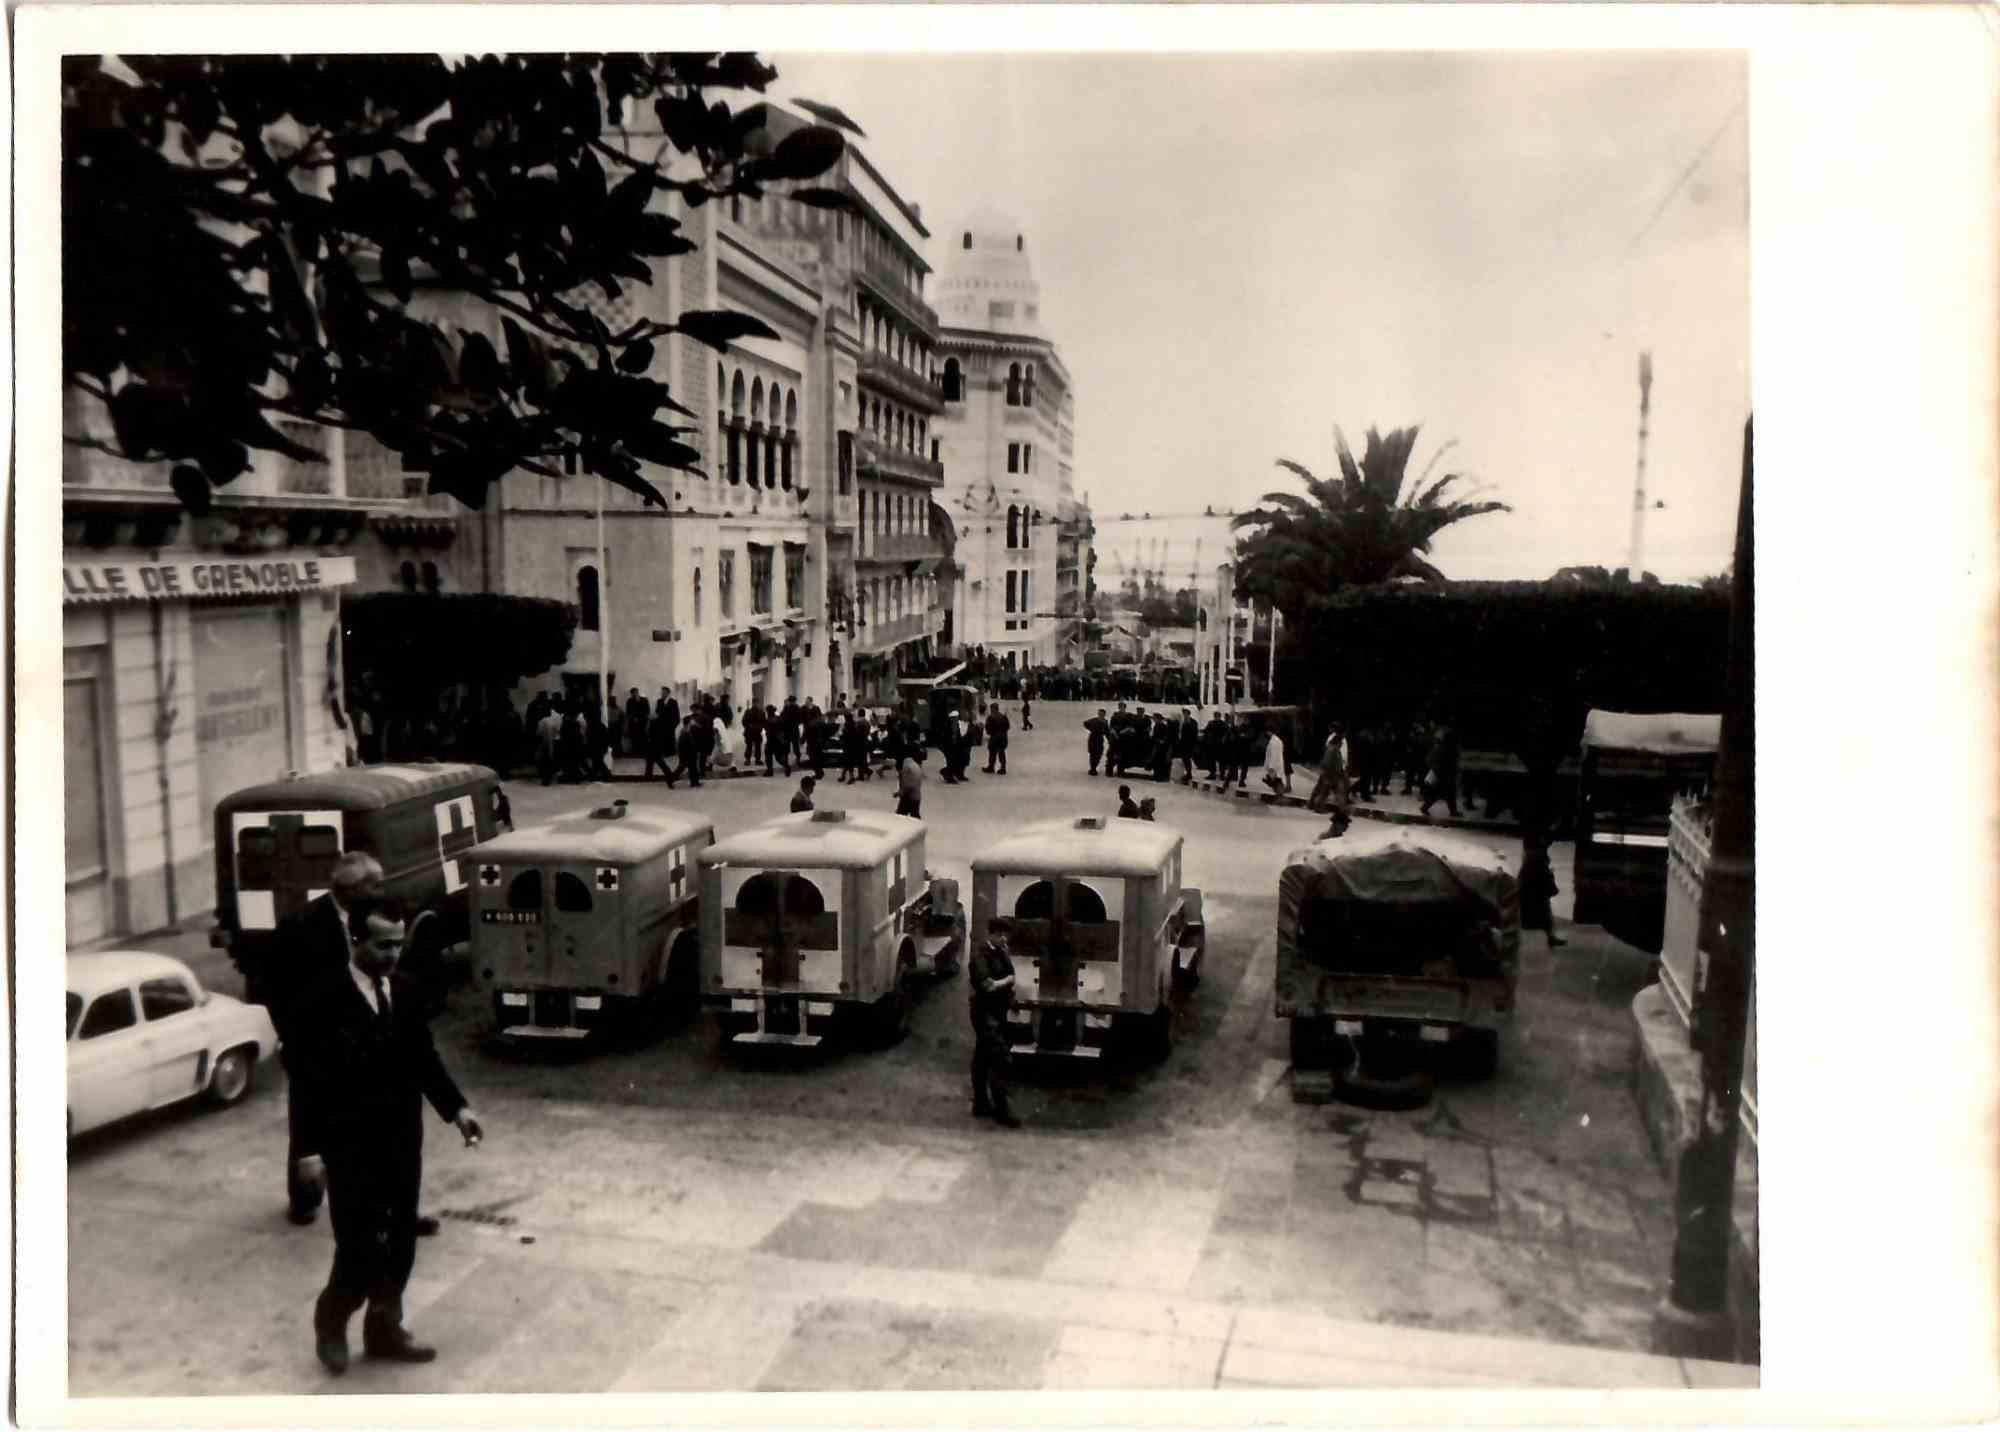 Unknown Black and White Photograph - Ambulances, Algeria - Original Vintage Photograph - Mid-20th Century